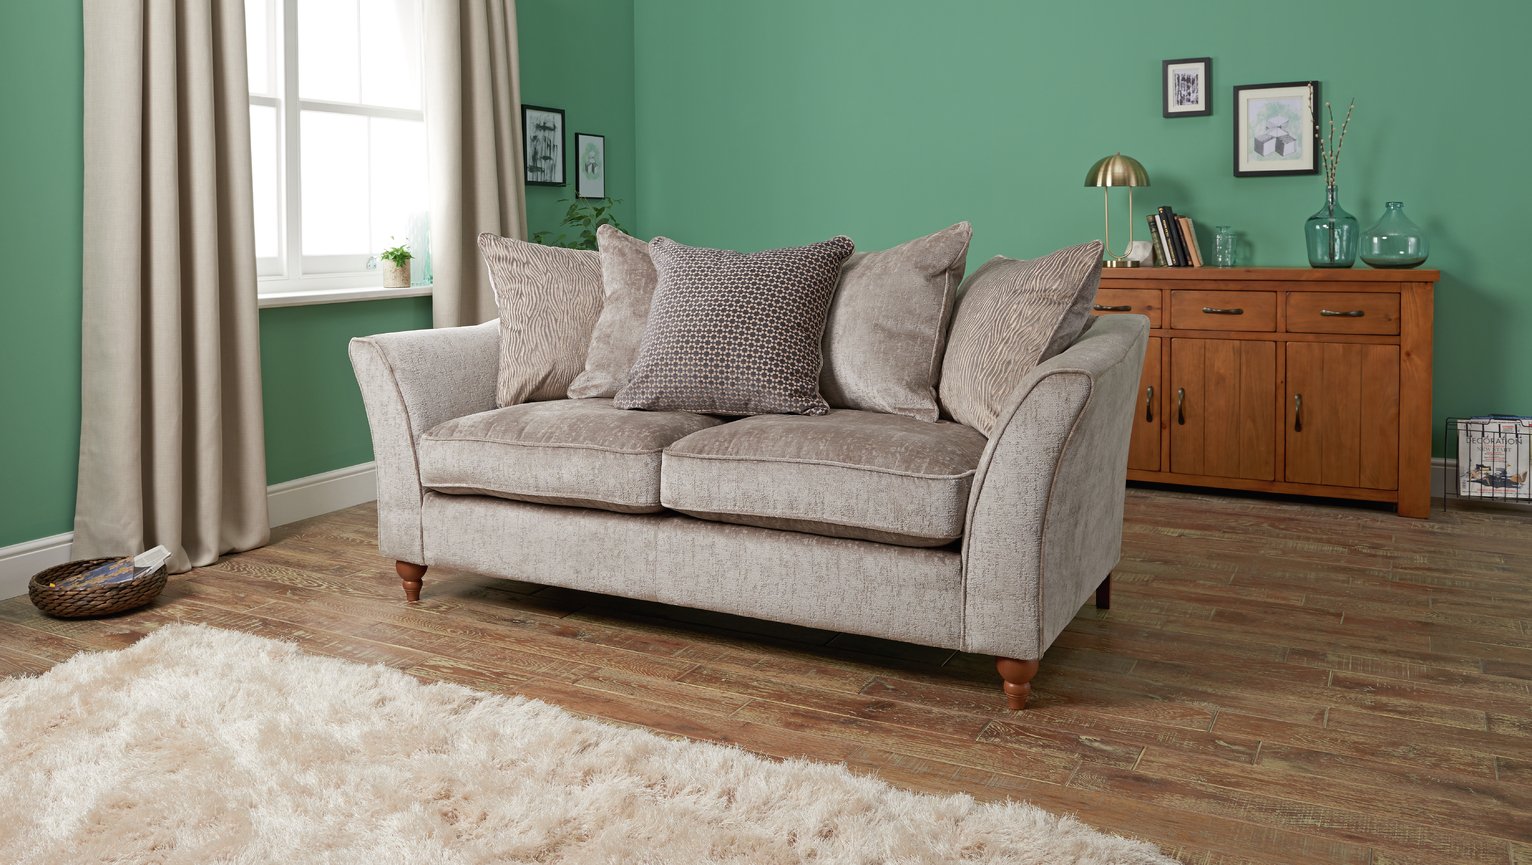 Argos Home Buxton 3 Seater Fabric Sofa Review